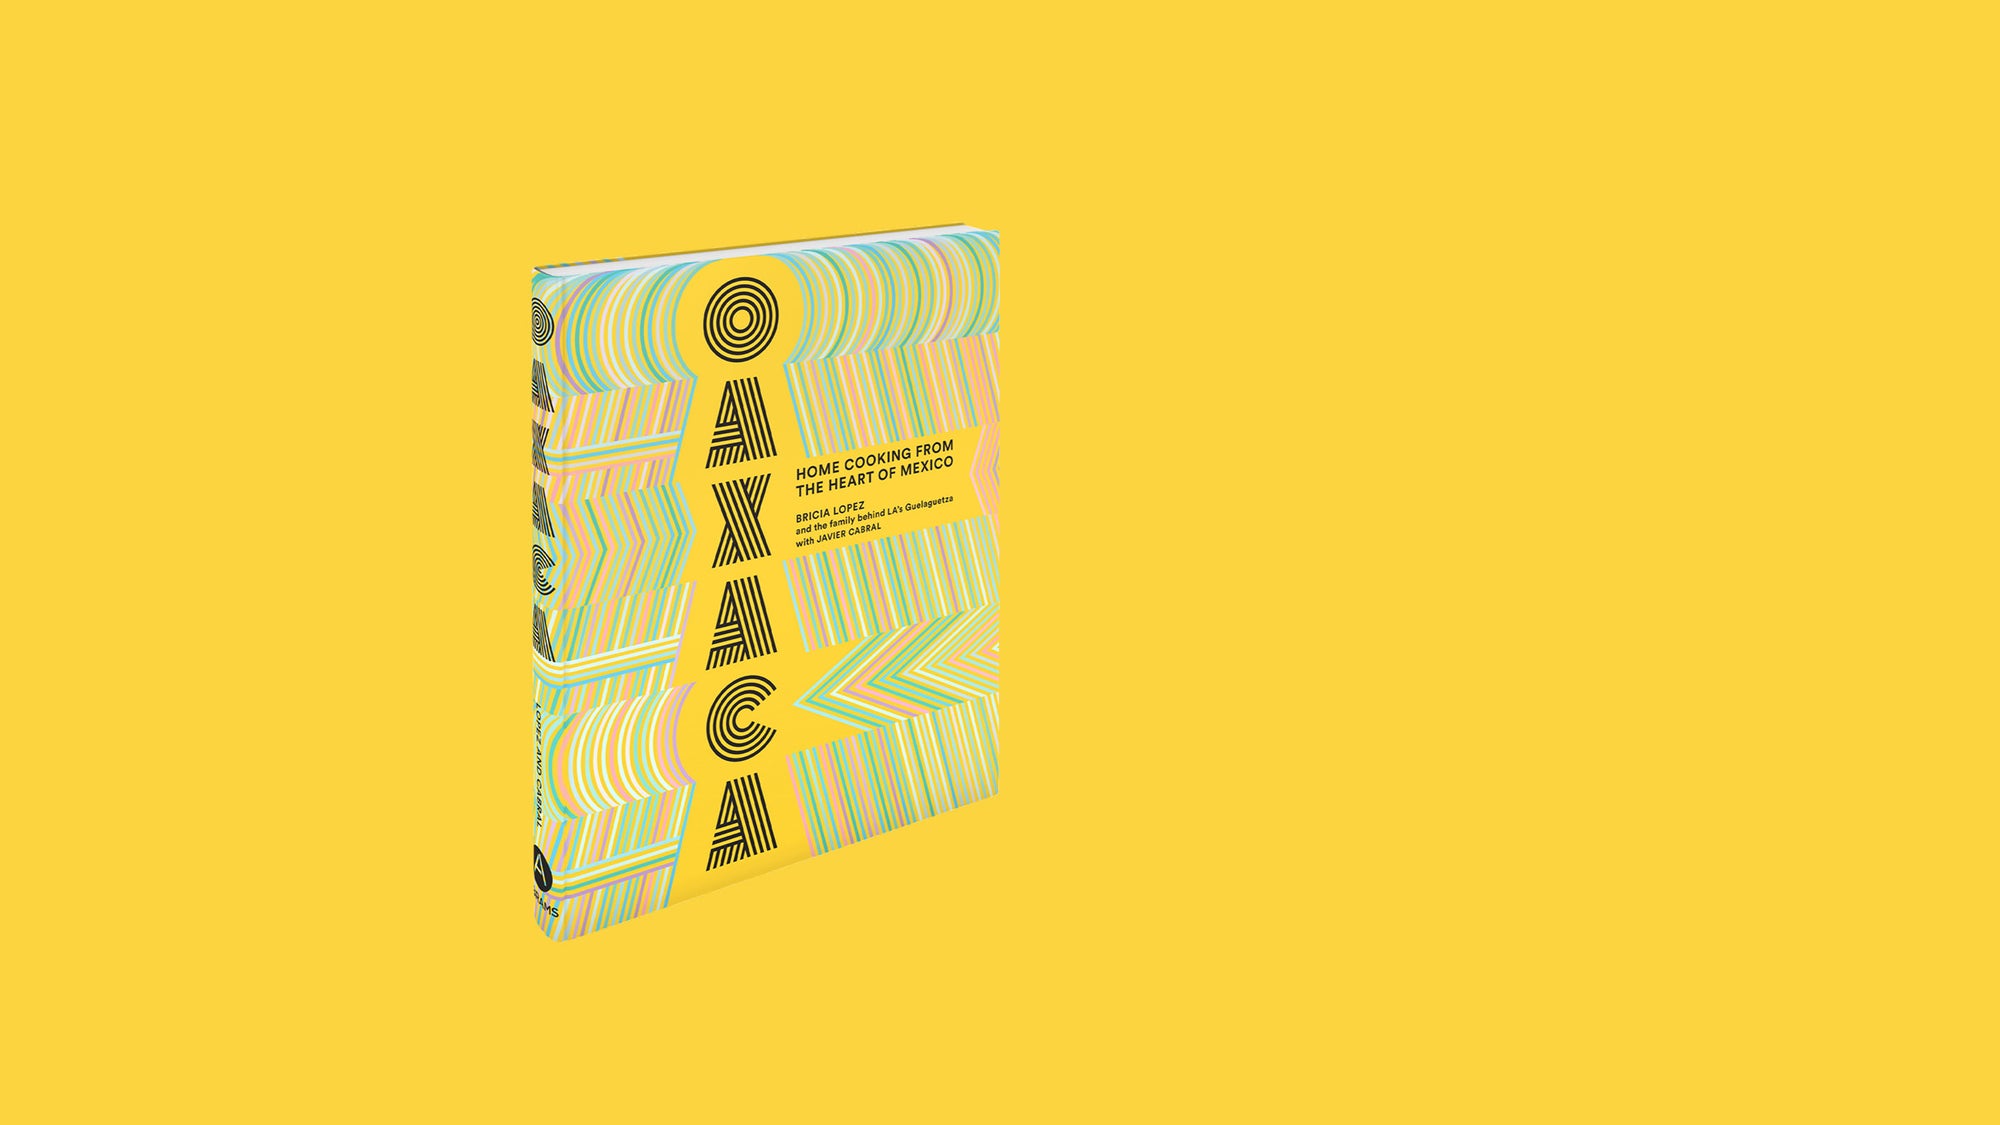 OAXACA Book Event - Homecoming - Homecoming